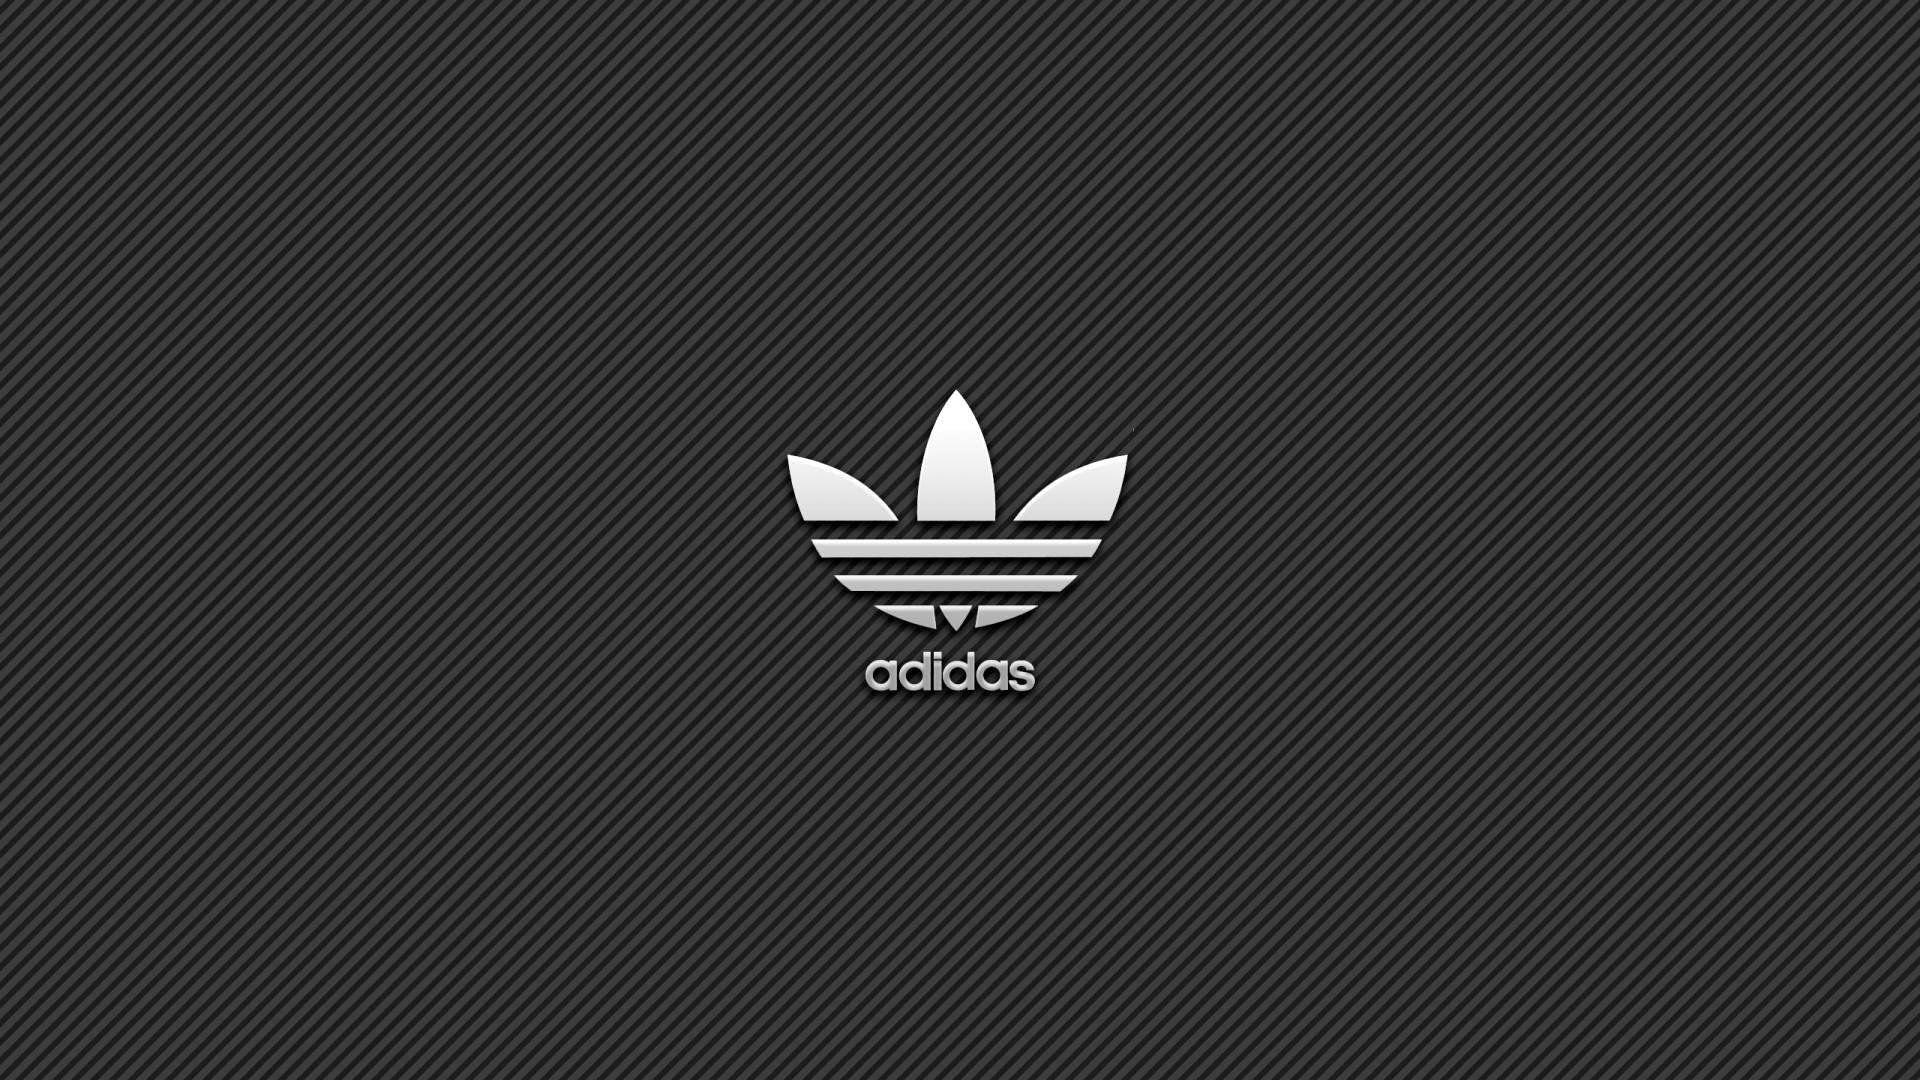 Adidas Originals Logo Wallpapers Top Free Adidas Originals Logo Backgrounds Wallpaperaccess